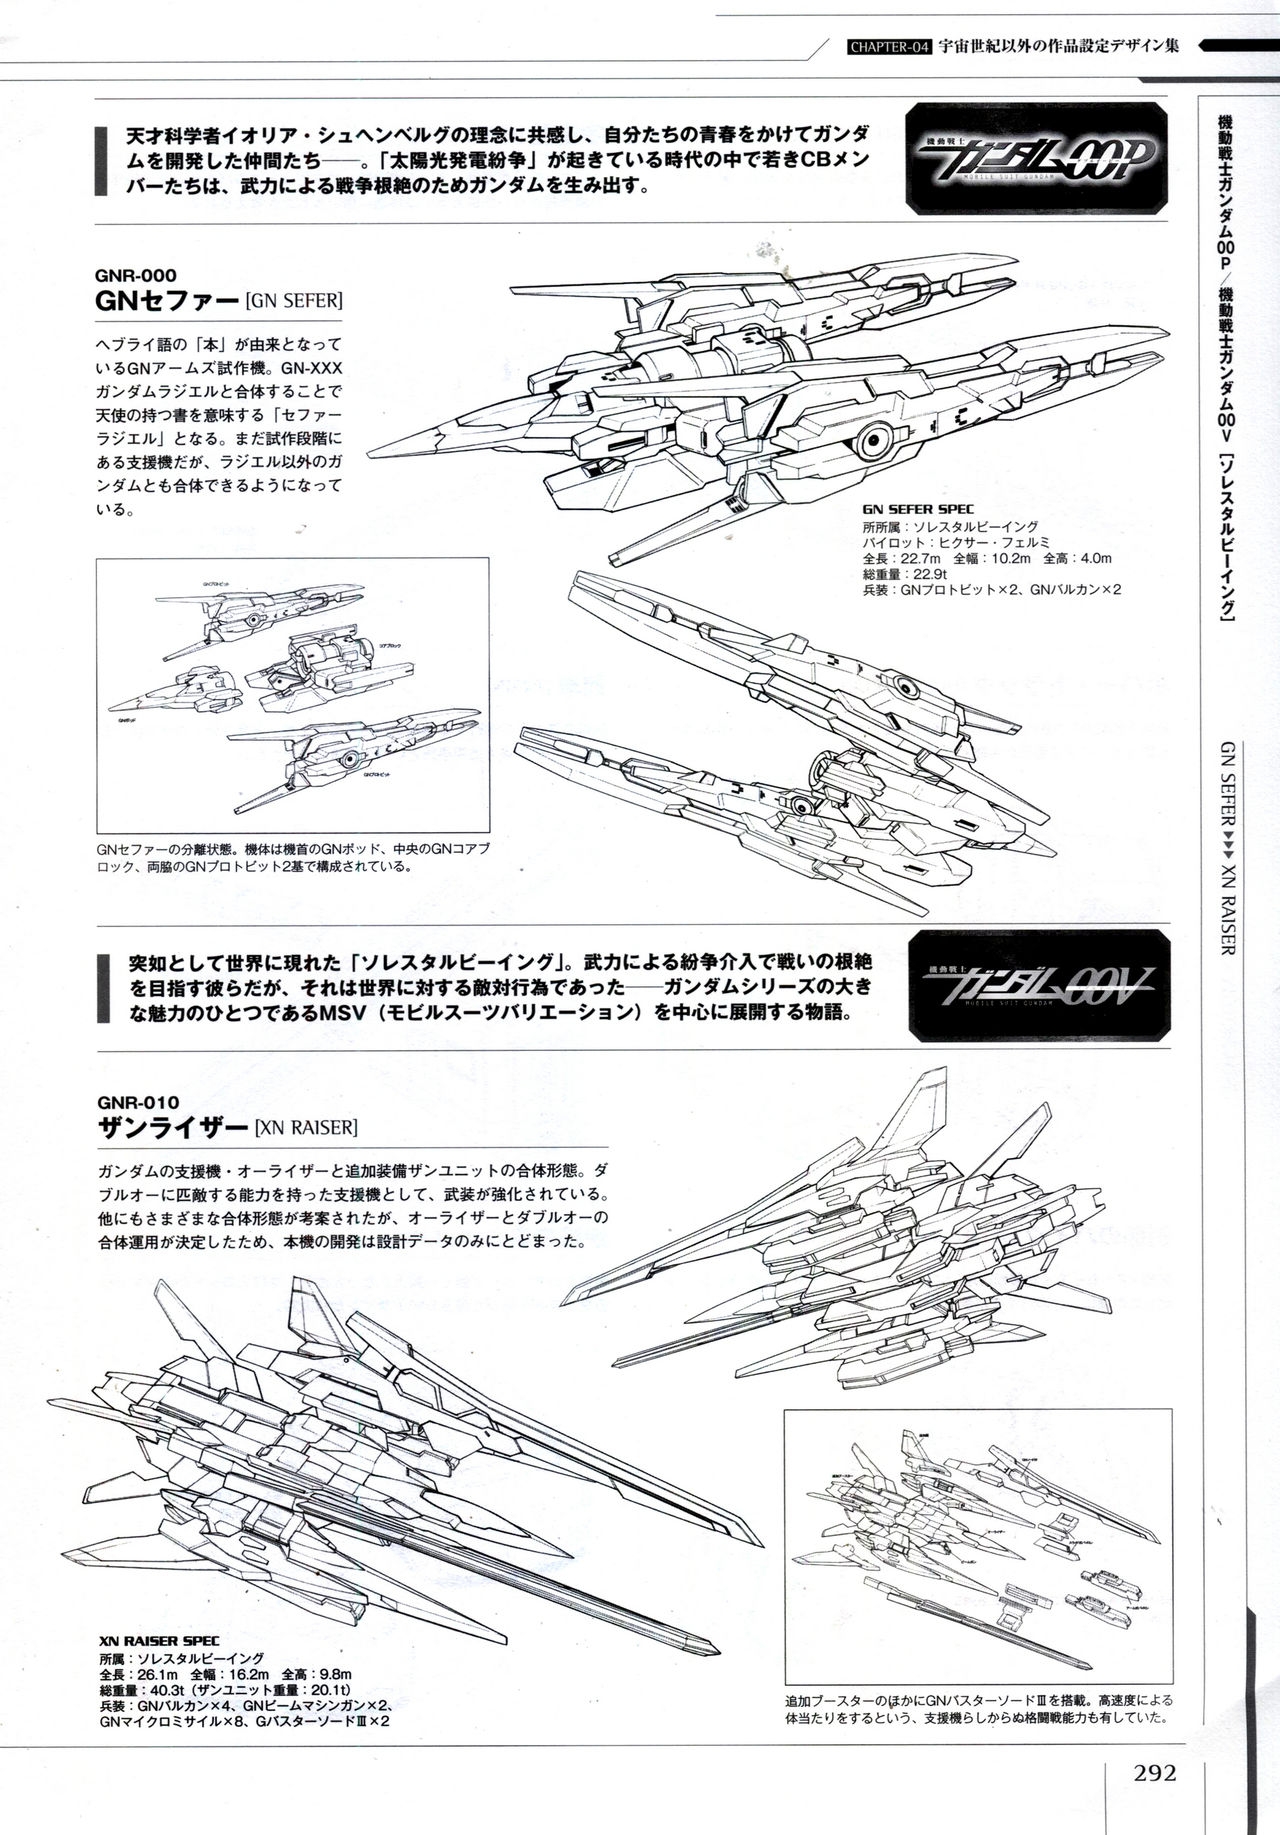 Mobile Suit Gundam - Ship & Aerospace Plane Encyclopedia - Revised Edition 297